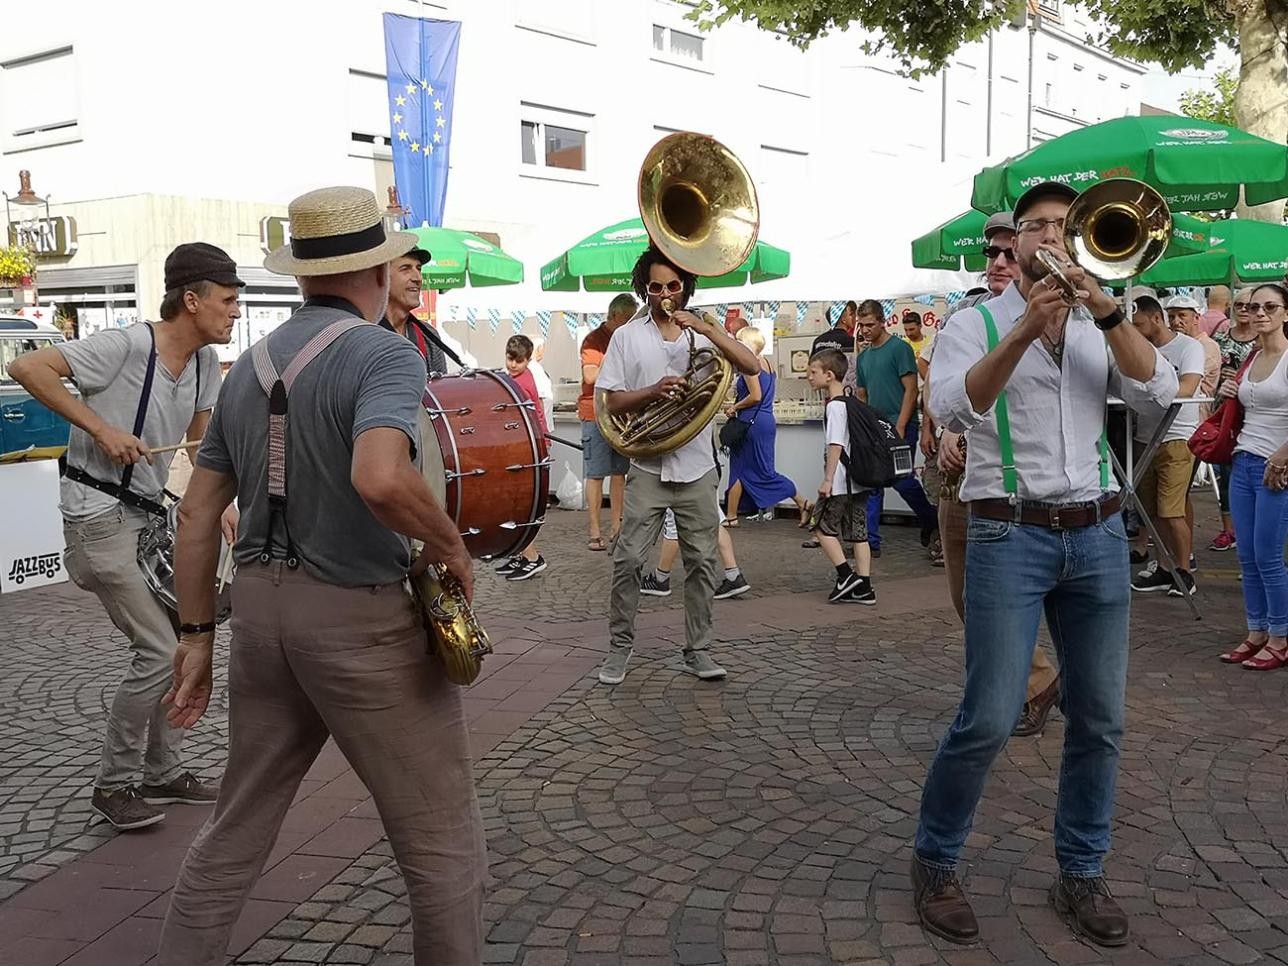 Musicians at the city festival in Rastatt